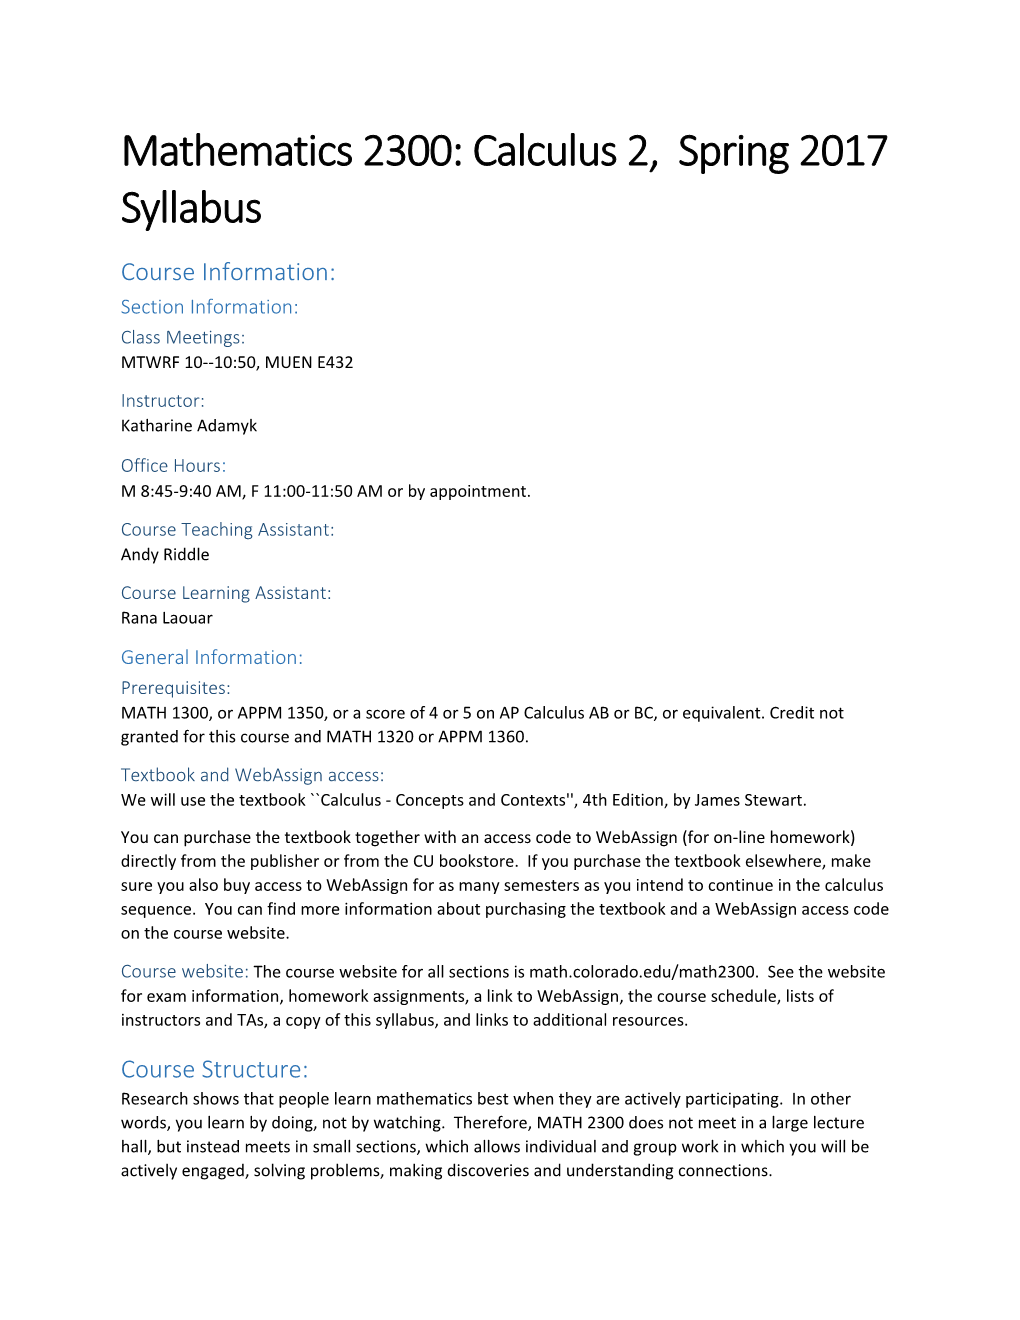 Mathematics 2300: Calculus 2, Spring 2017 Syllabus